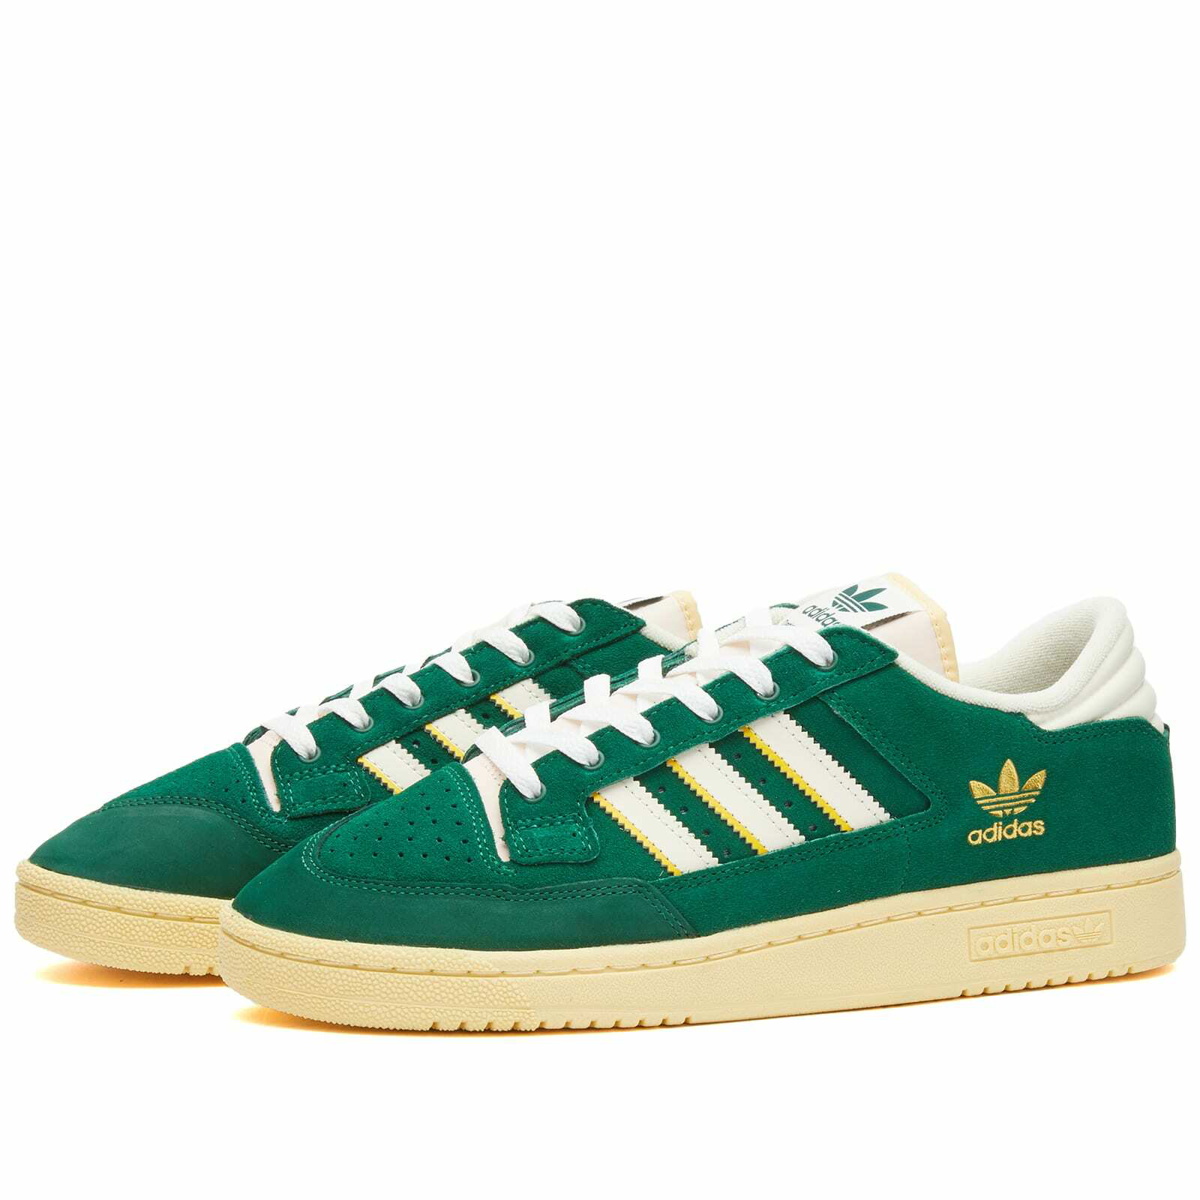 Adidas Men's Centennial 85 Lo Sneakers in Collegiate Green/Cream White ...